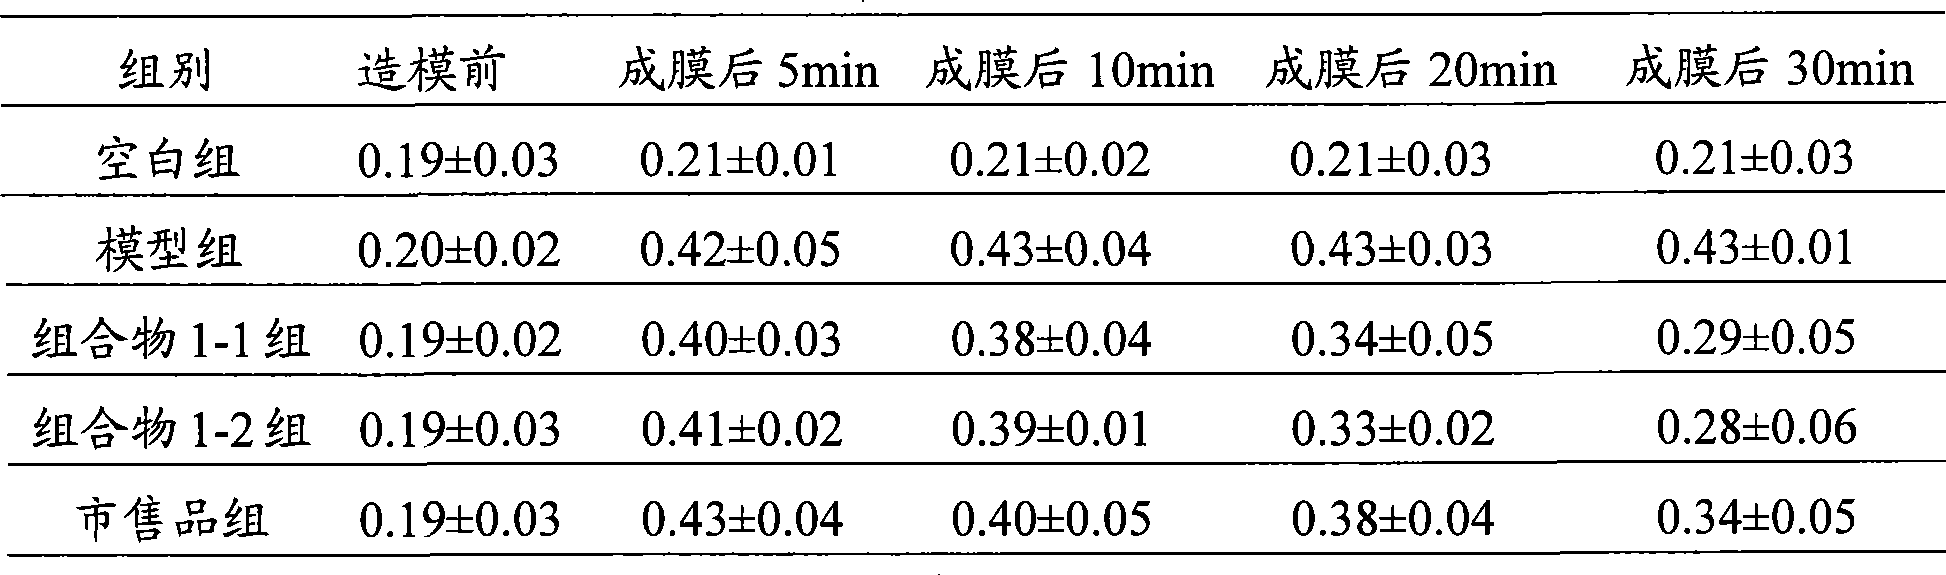 Medicine composition of Panax notoginseng saponins